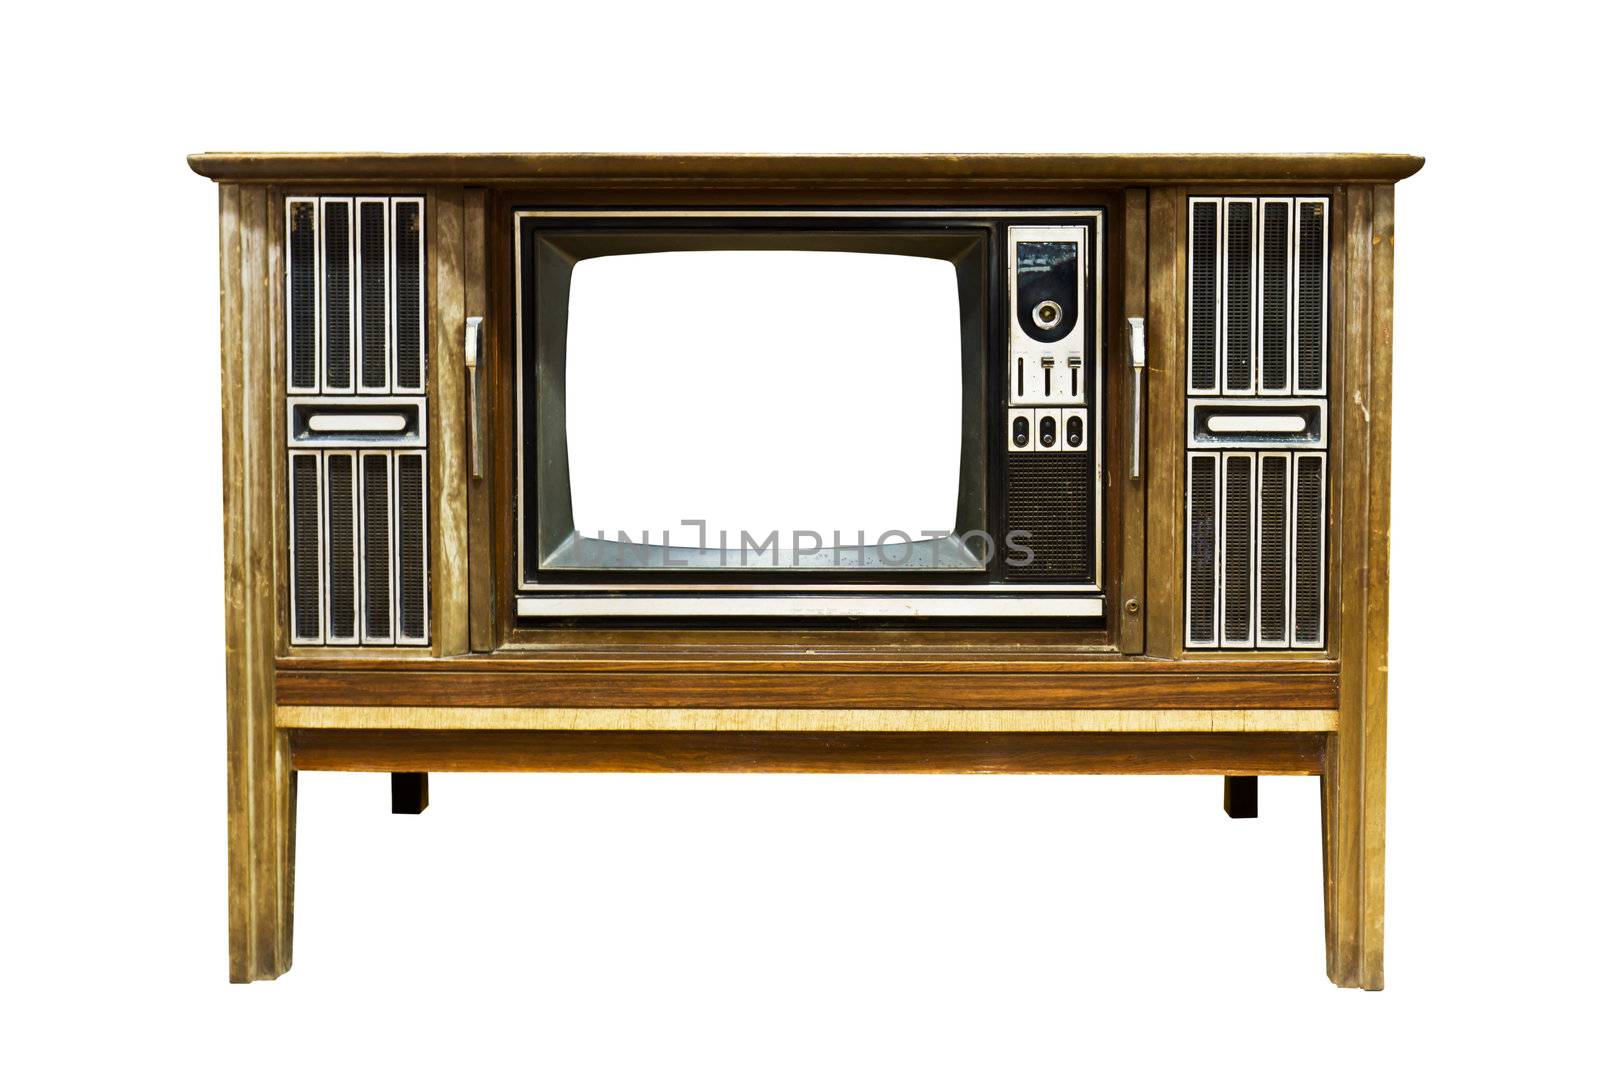 Retro Vintage television 2 by stoonn